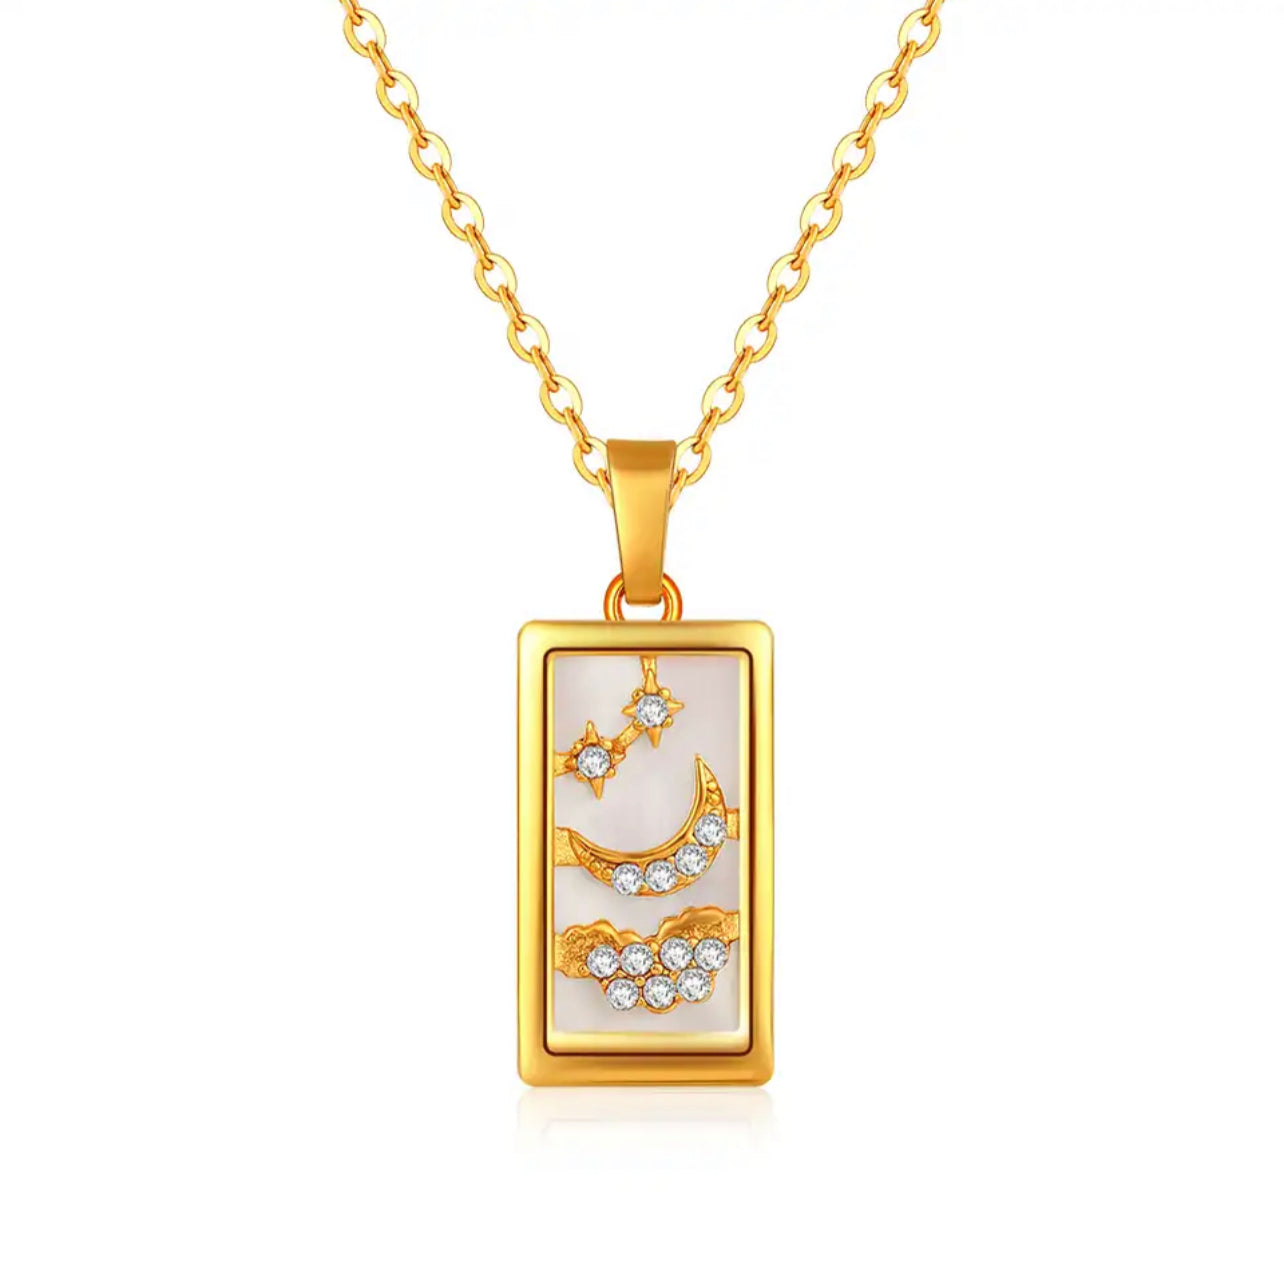 Gold Enamel Tarot Card Necklace | Major Arcana